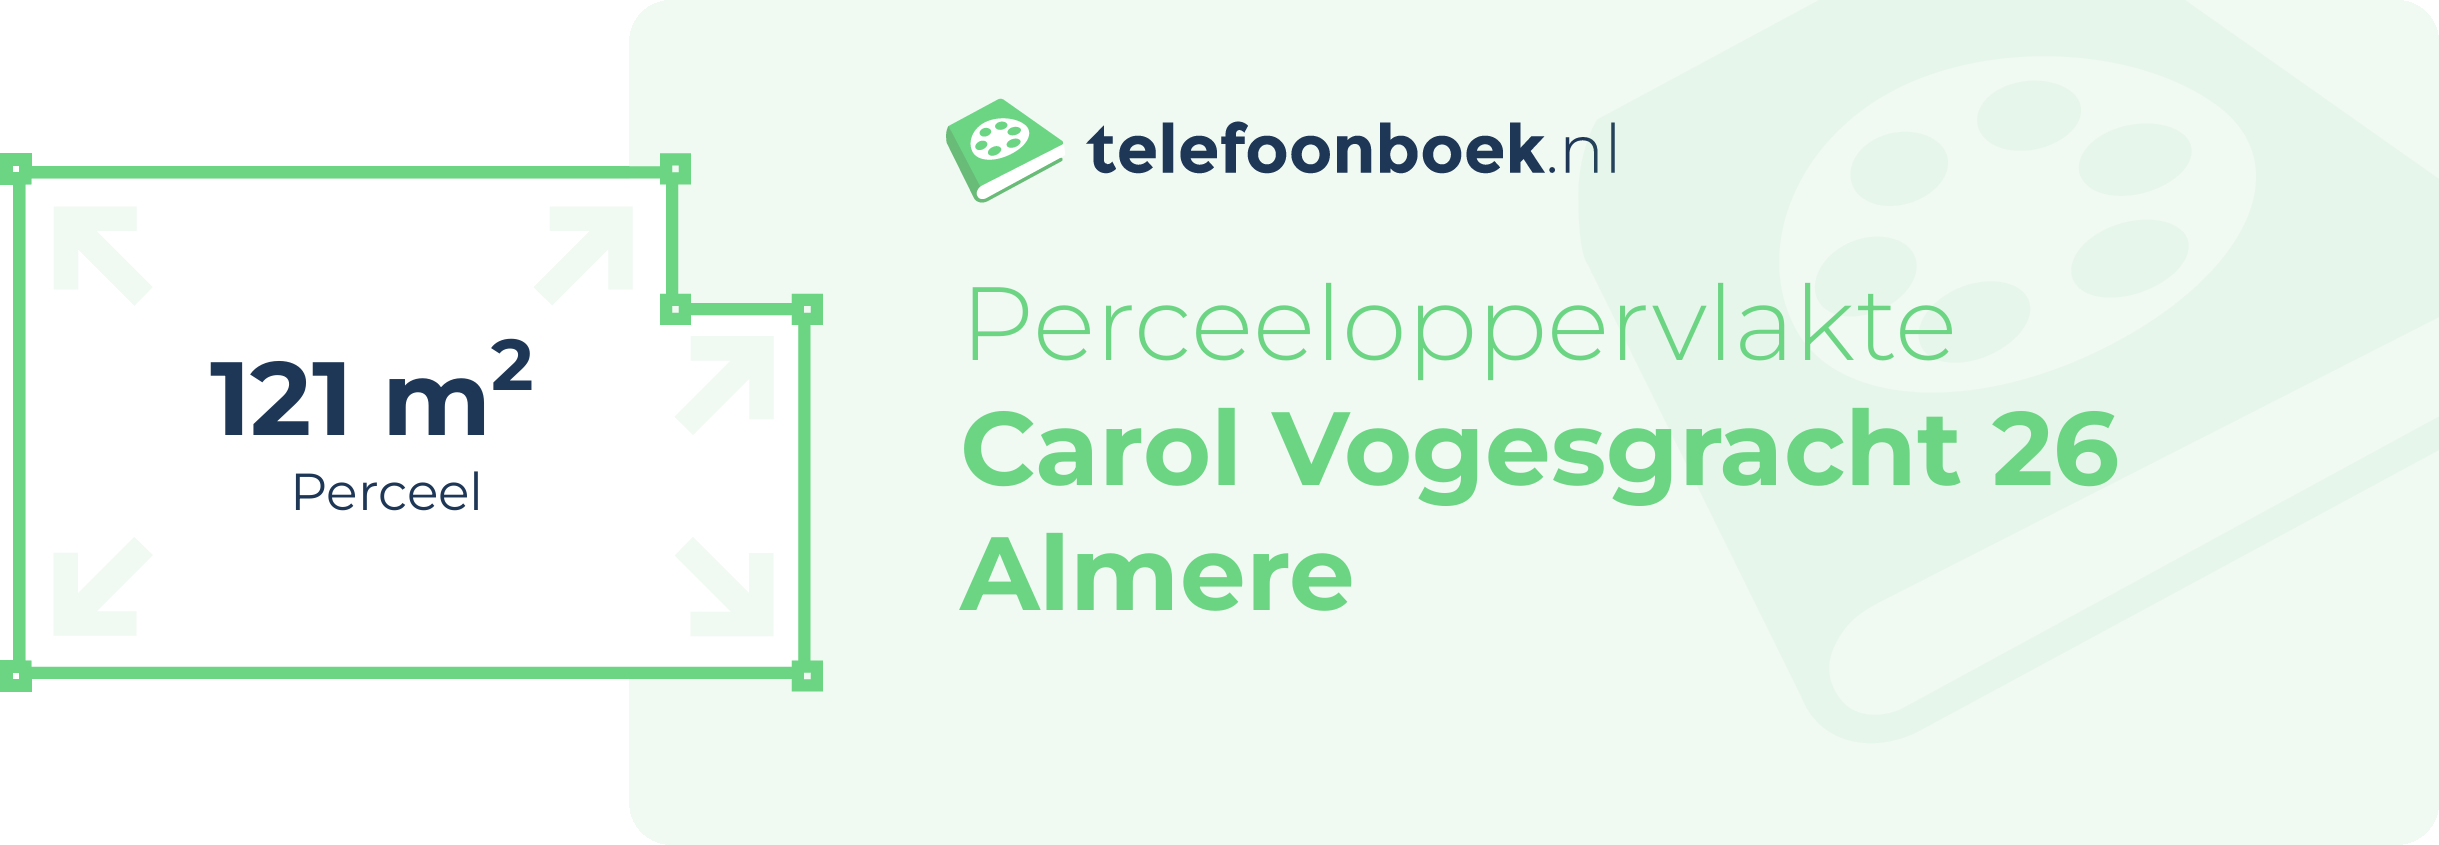 Perceeloppervlakte Carol Vogesgracht 26 Almere